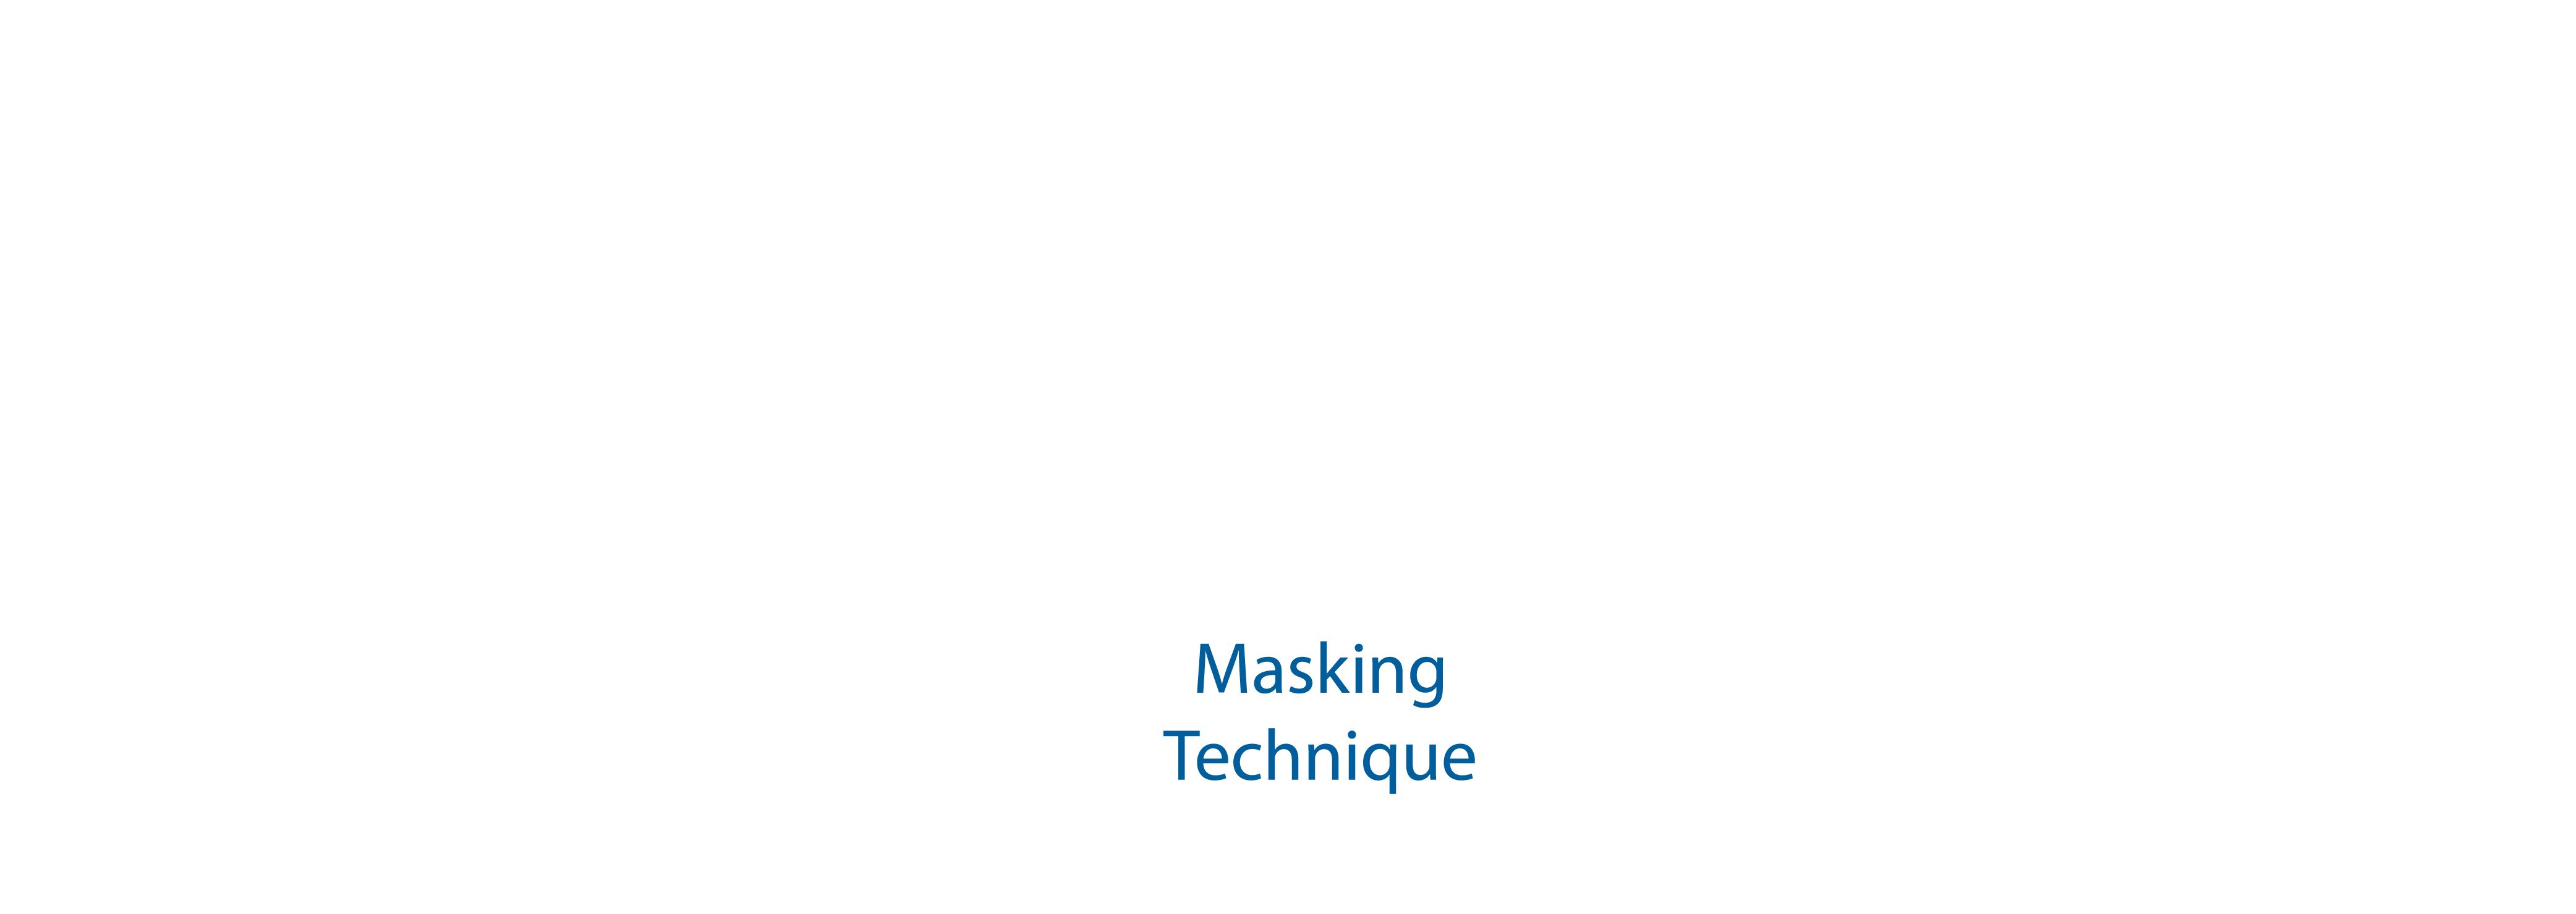 X3 Data Masking